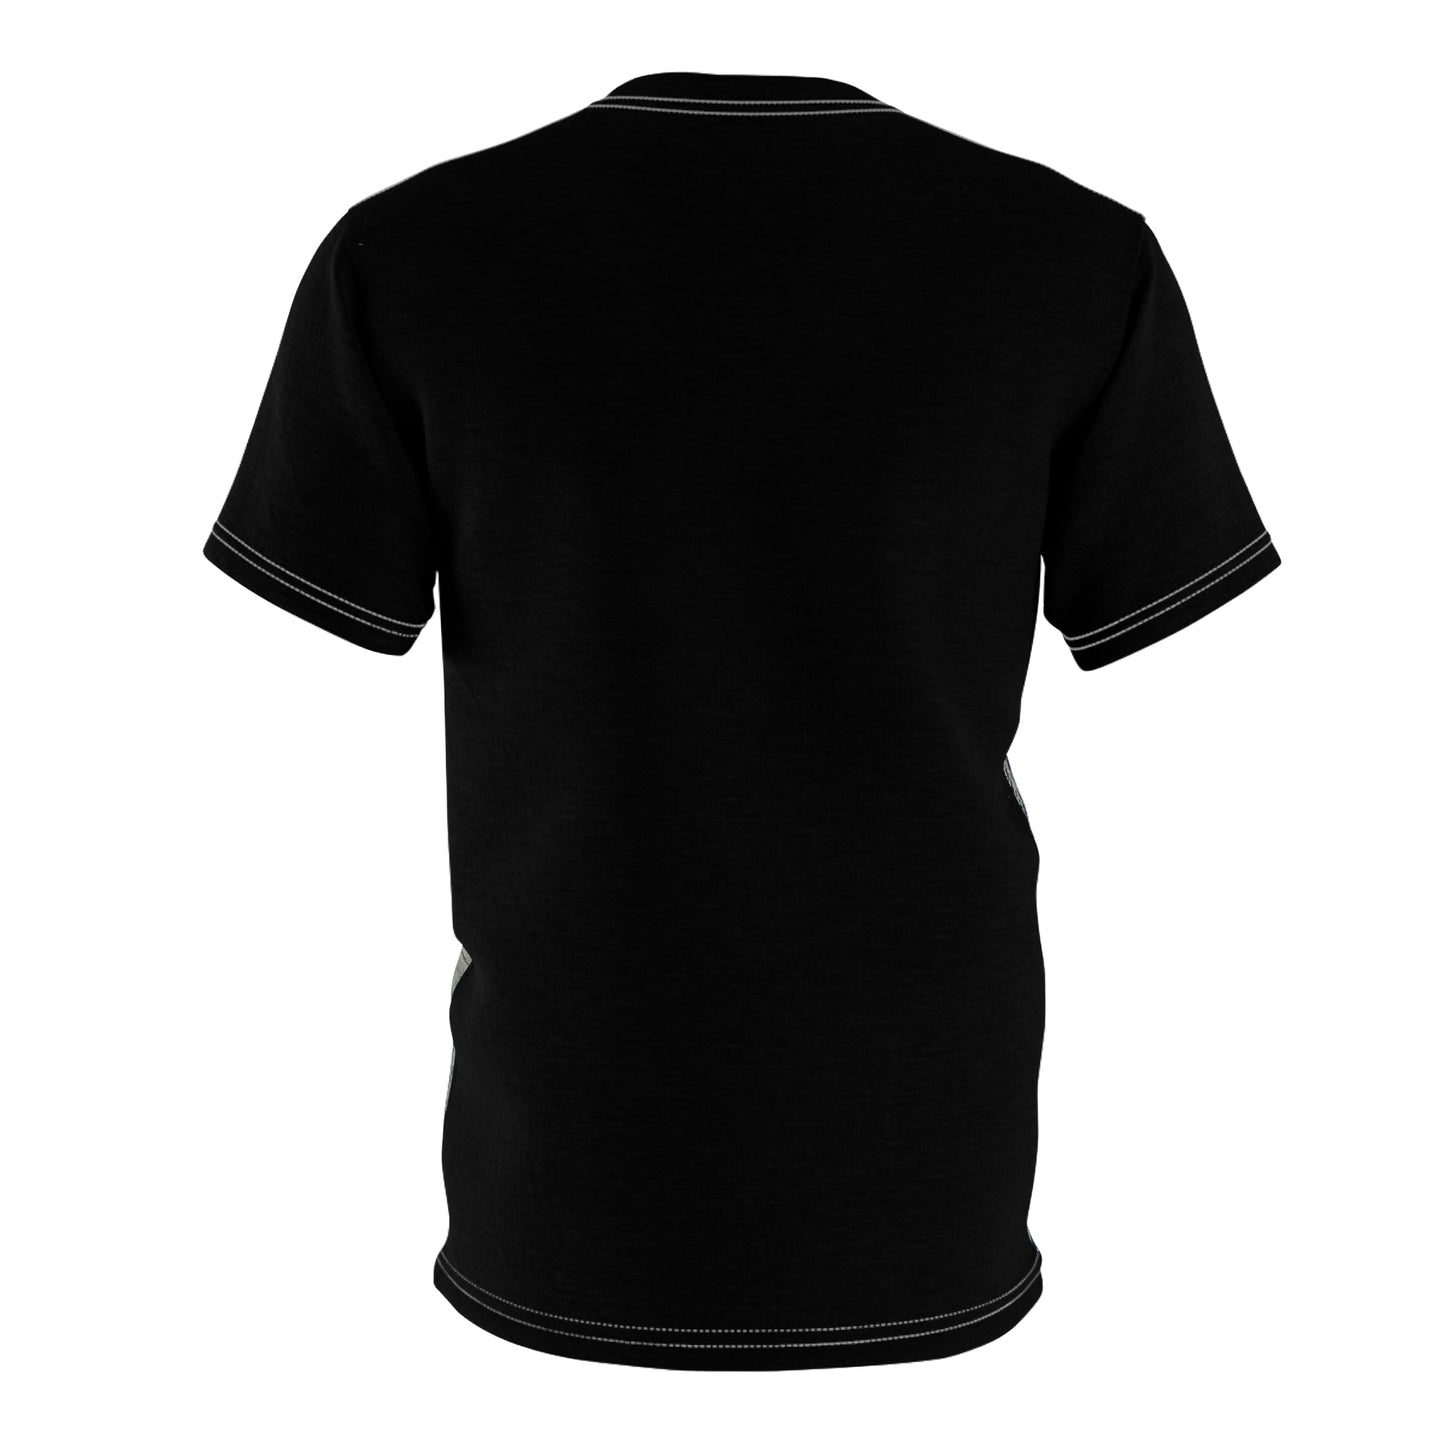 Sketch - Unisex All-Over Print Cut & Sew T-Shirt